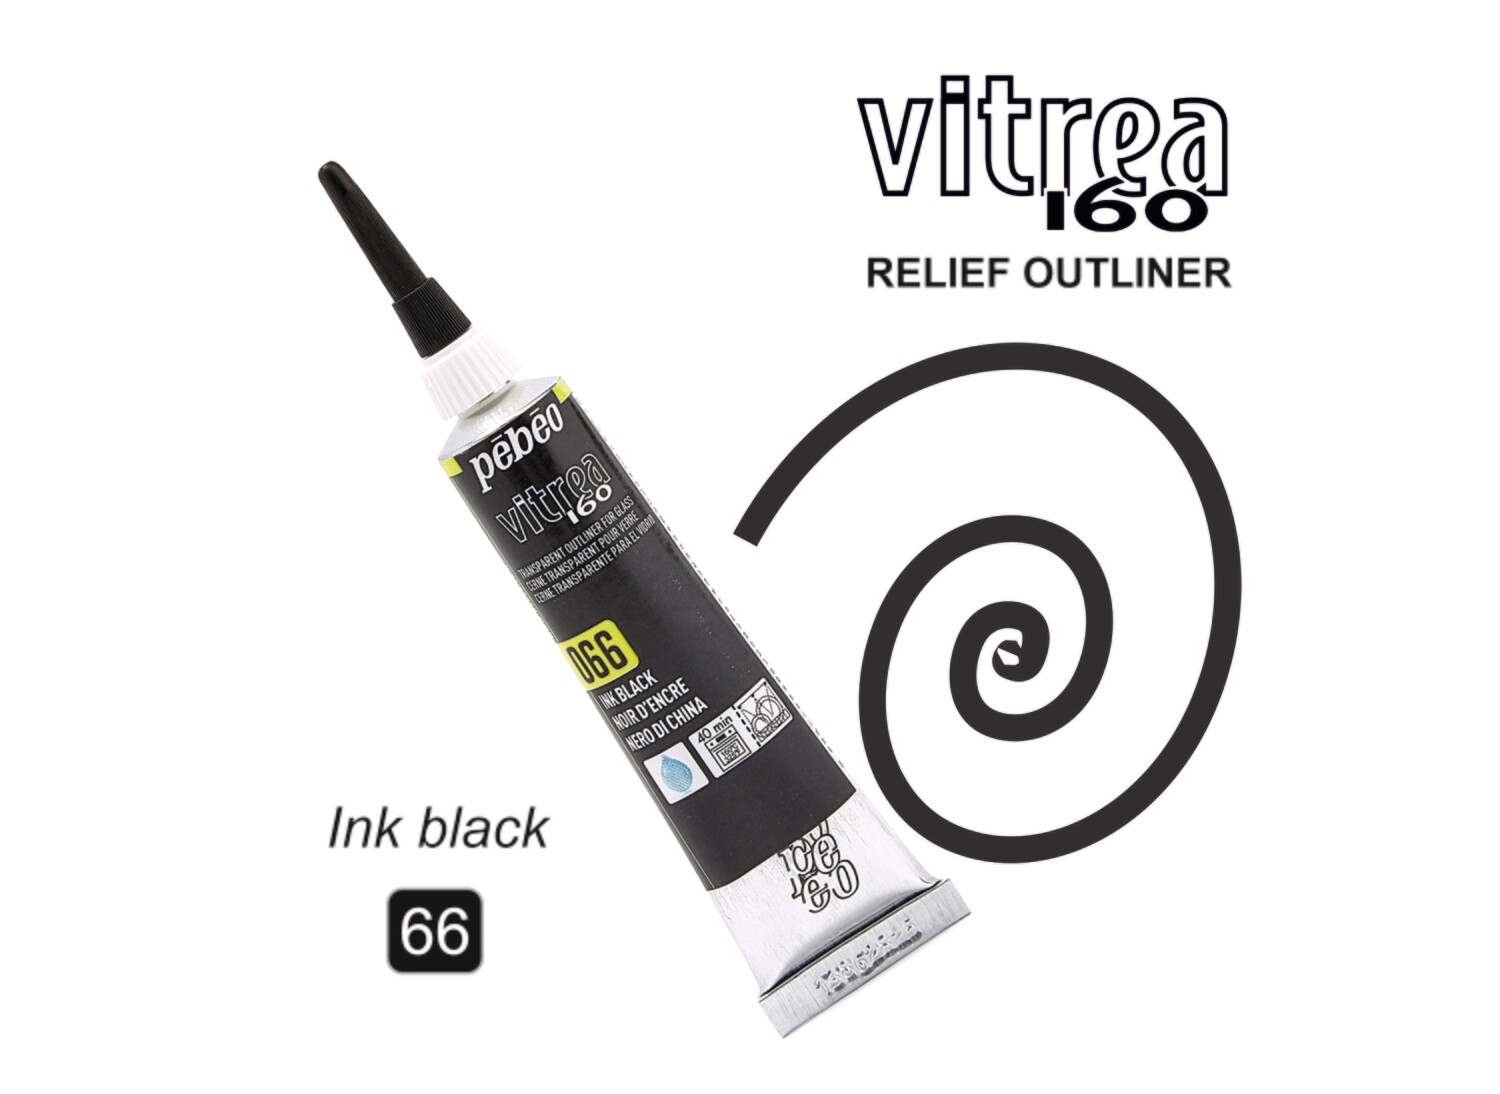 Vitrea-160 Outliner 20ml 66 Ink Black